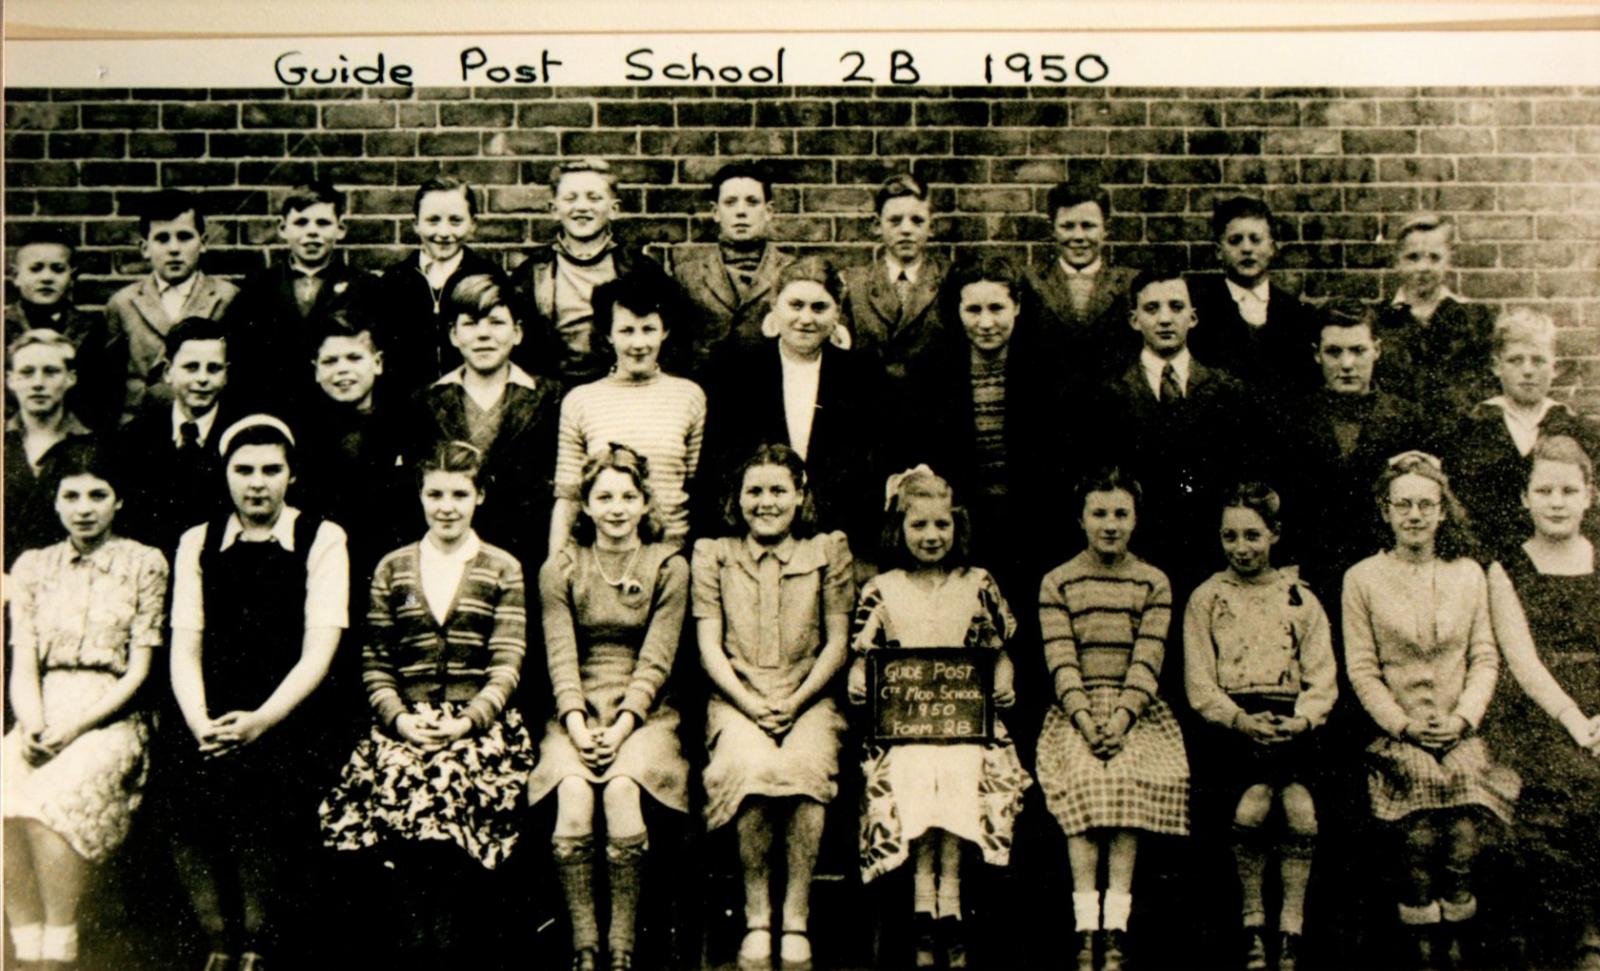 guidepost school 2B 1950